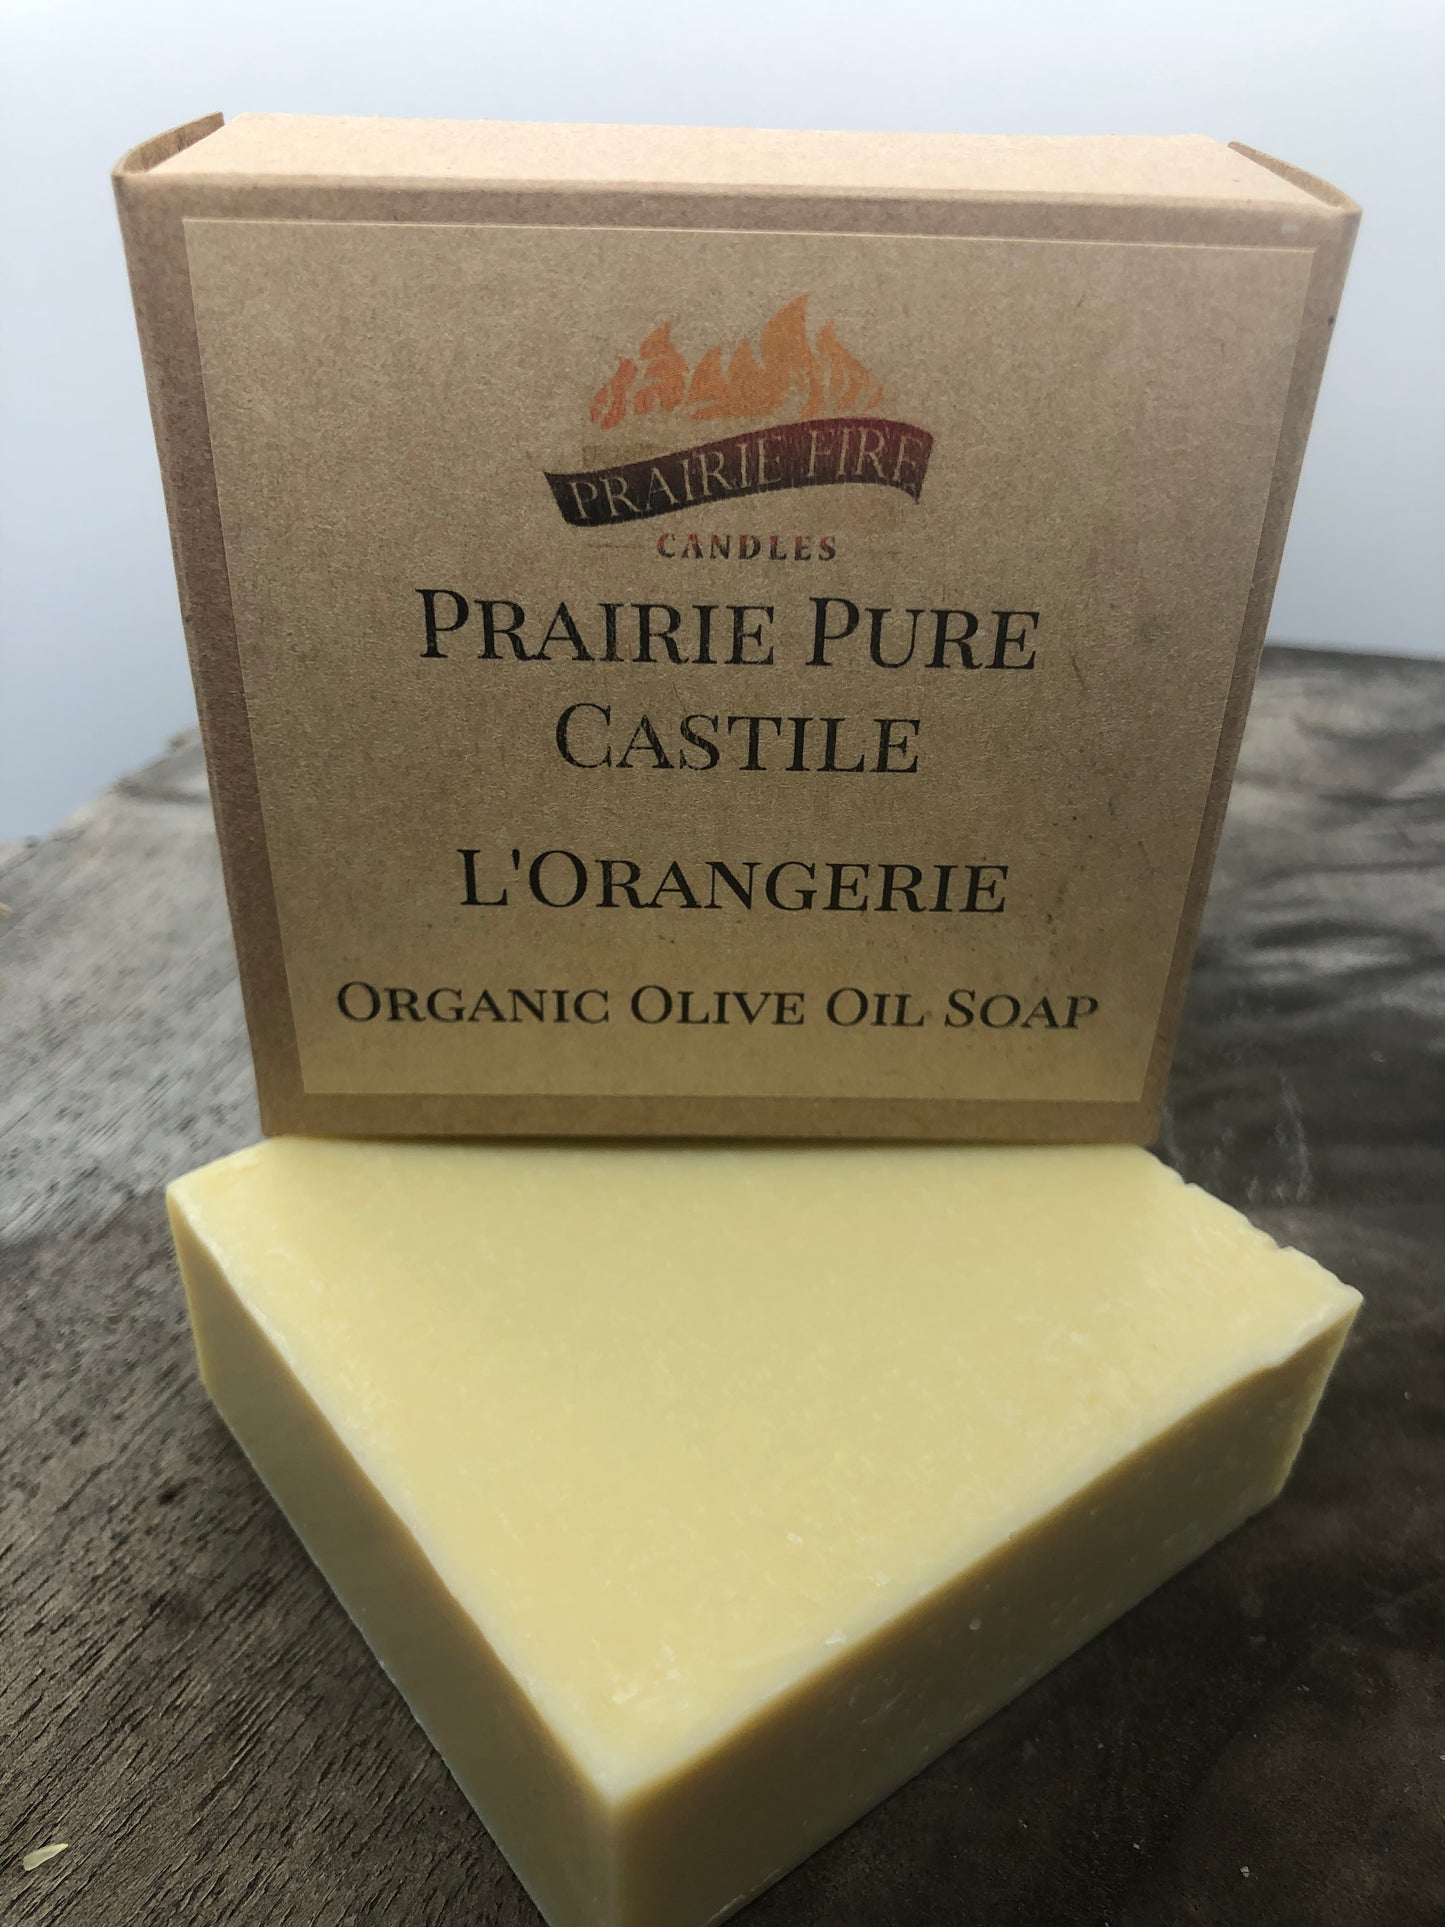 L'Orangerie Real Castile Organic Olive Oil Soap for Sensitive Skin - Dye Free - 100% Certified Organic Extra Virgin Olive Oil - Prairie Fire Candles